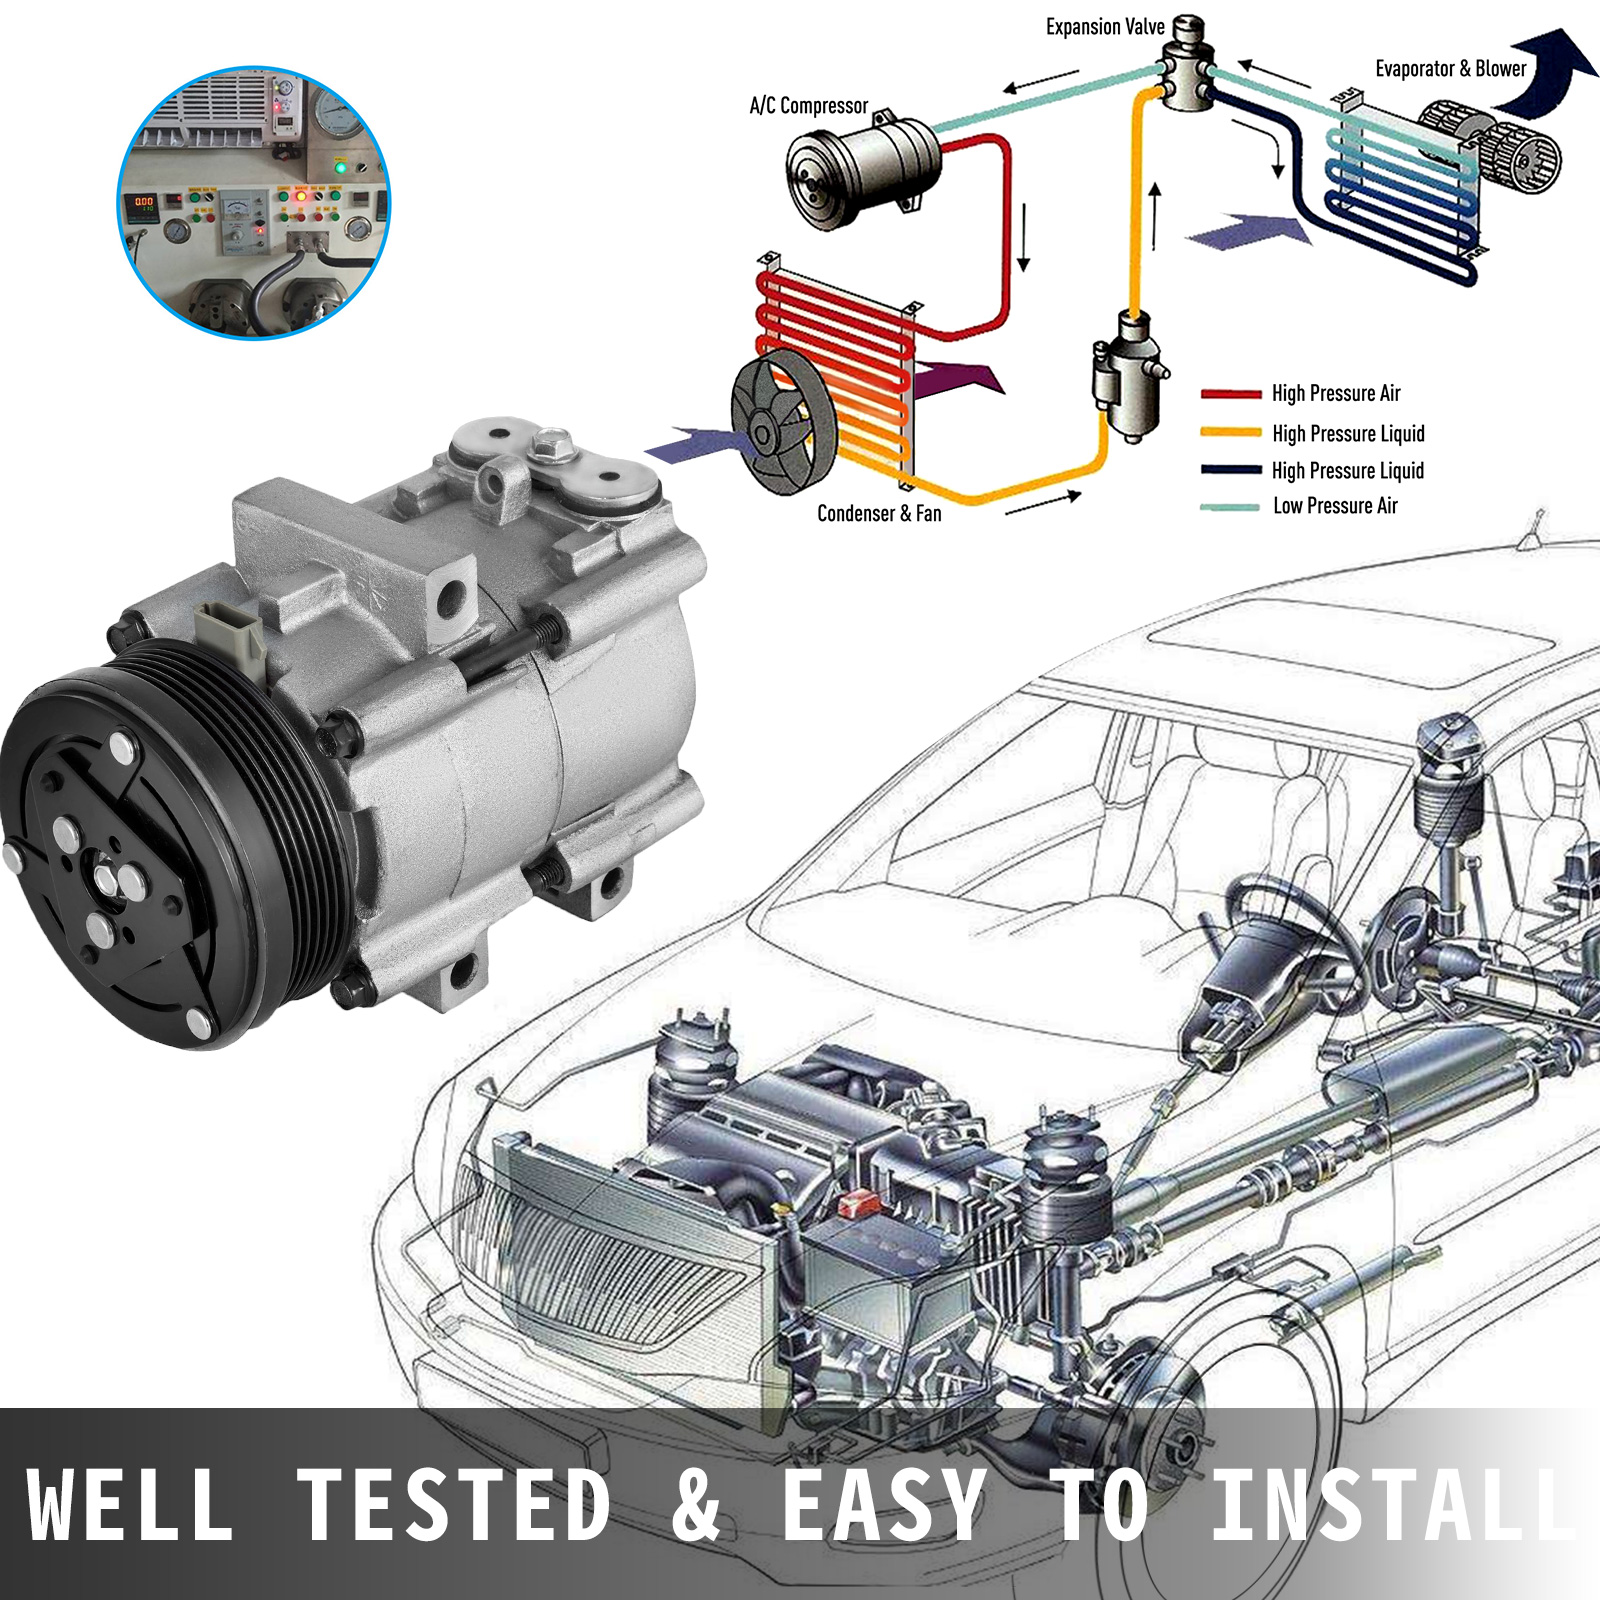 ford ac compressor repair cost